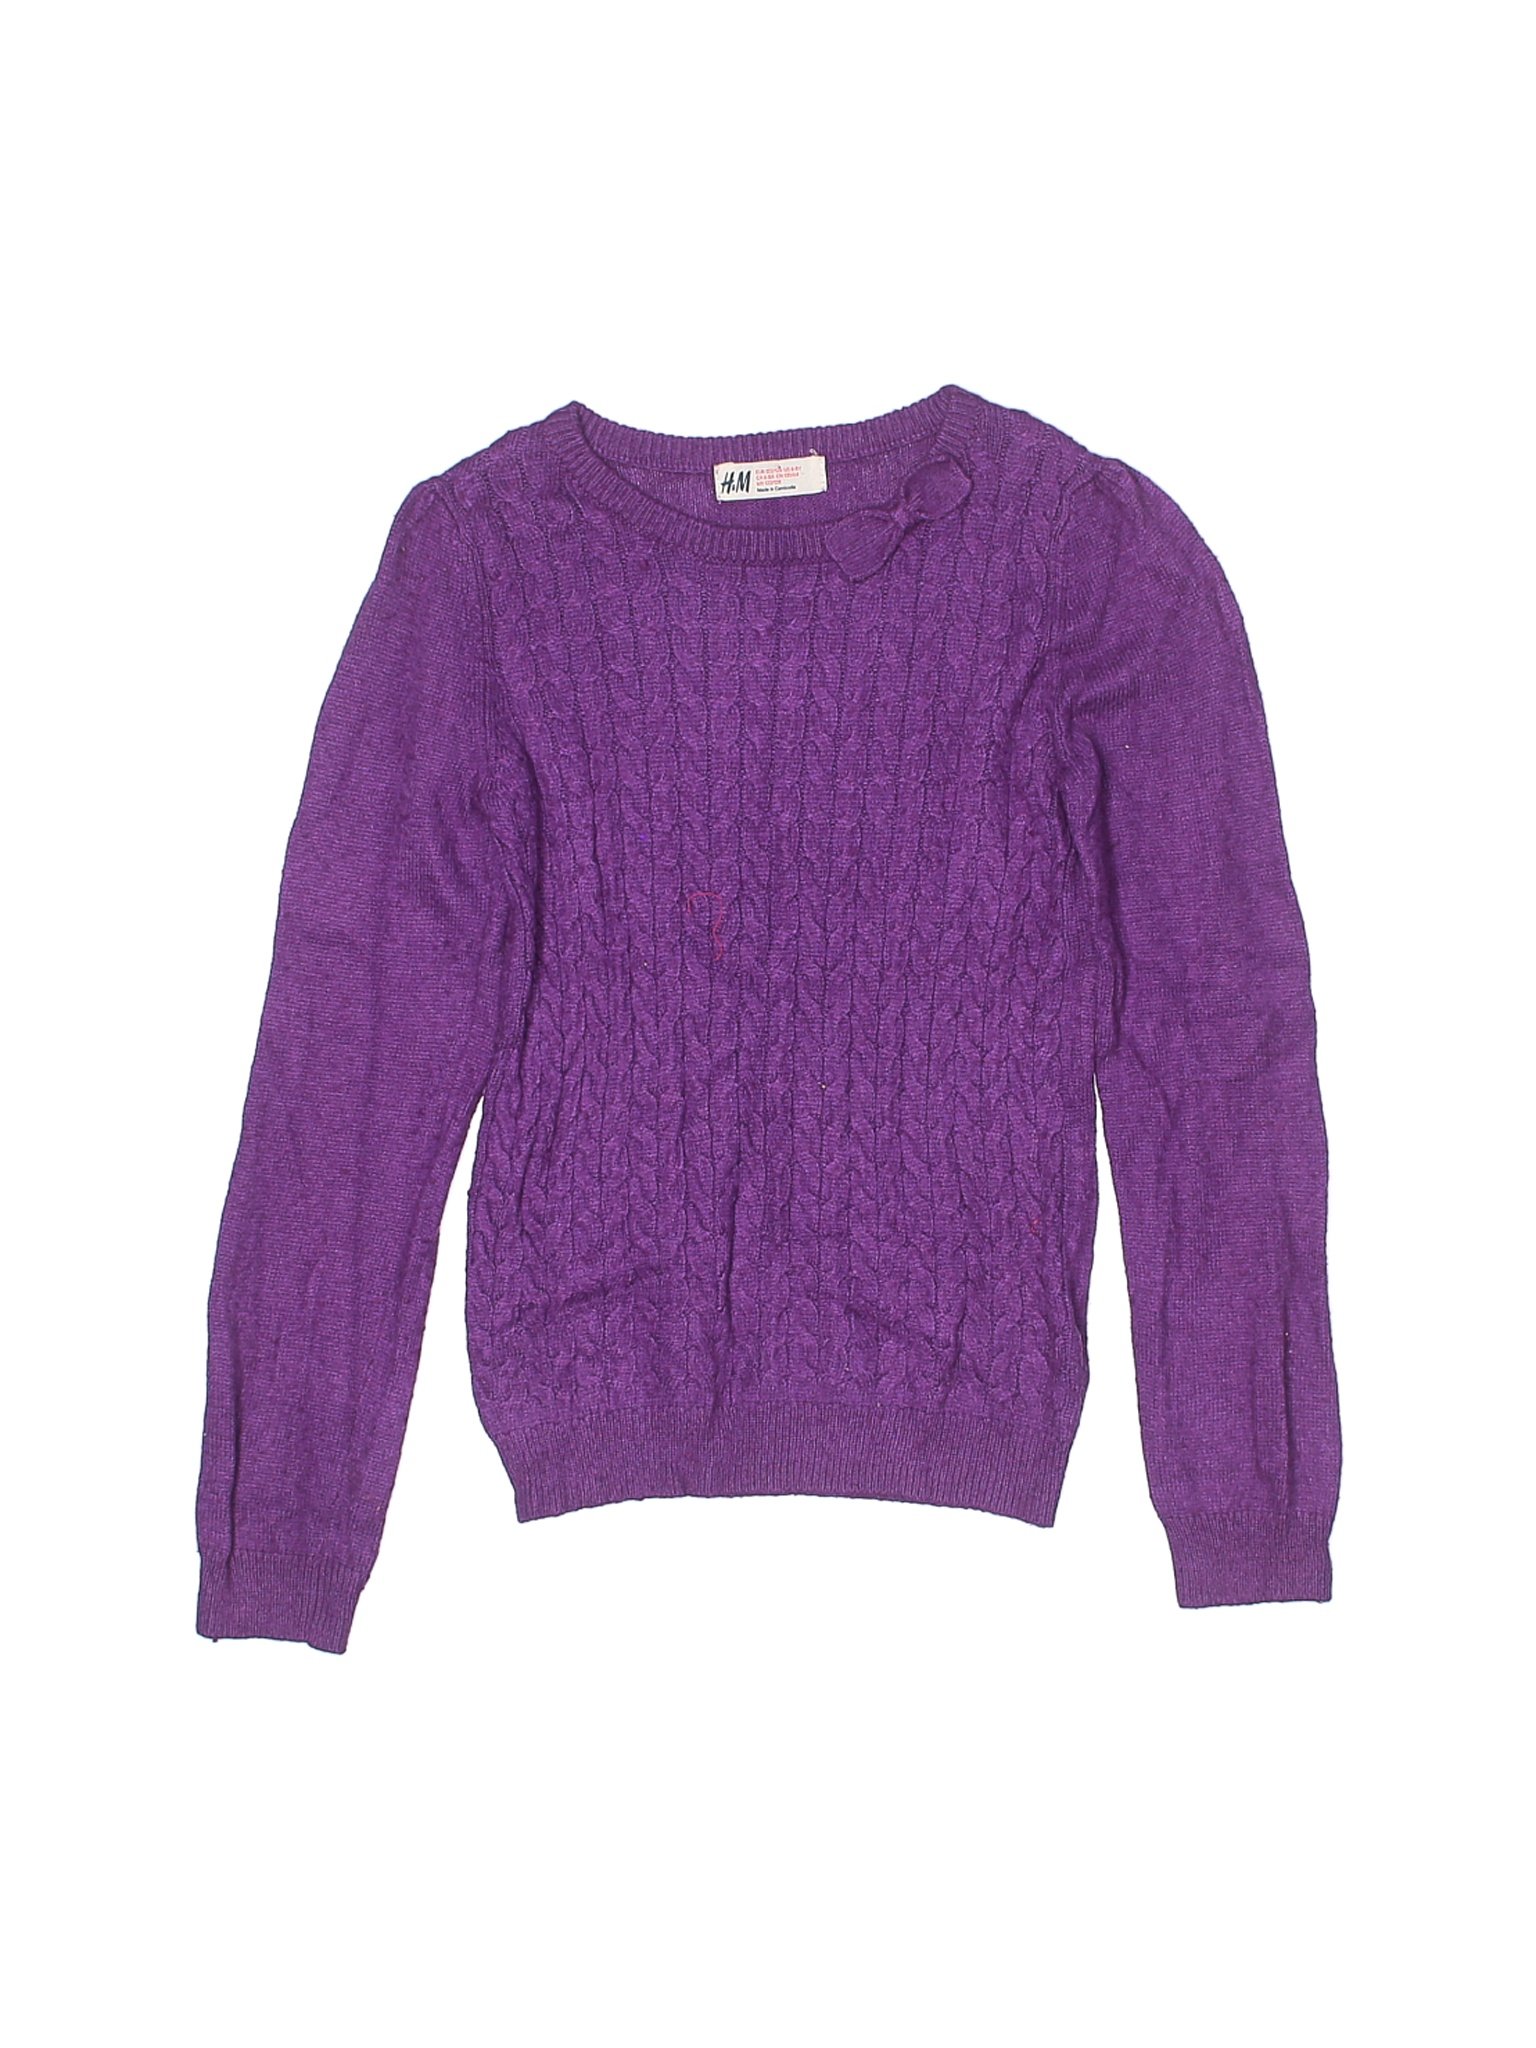 H&M Girls Purple Pullover Sweater 6 | eBay